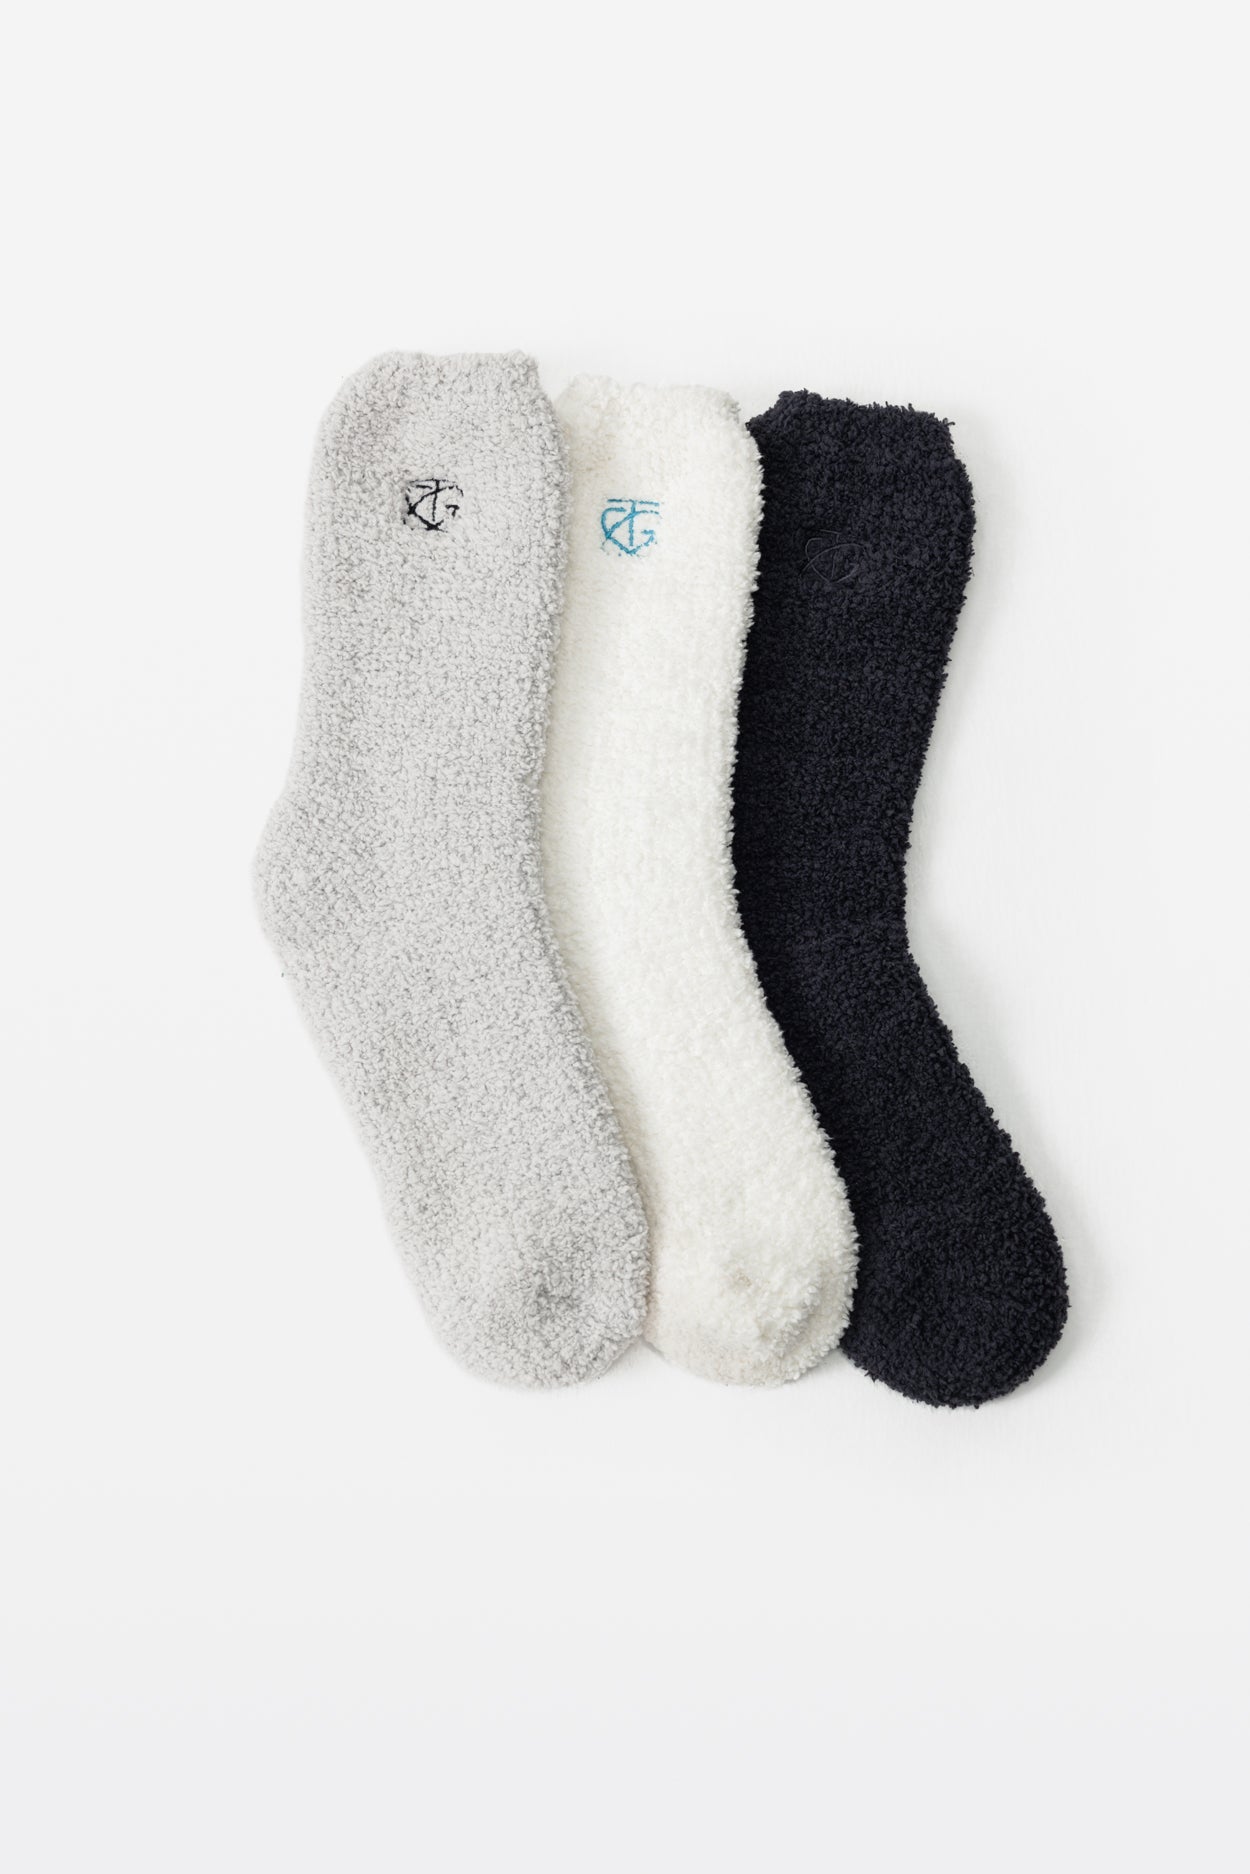 Light Grey Soft Plush Socks - Socks - Touchofgod.co